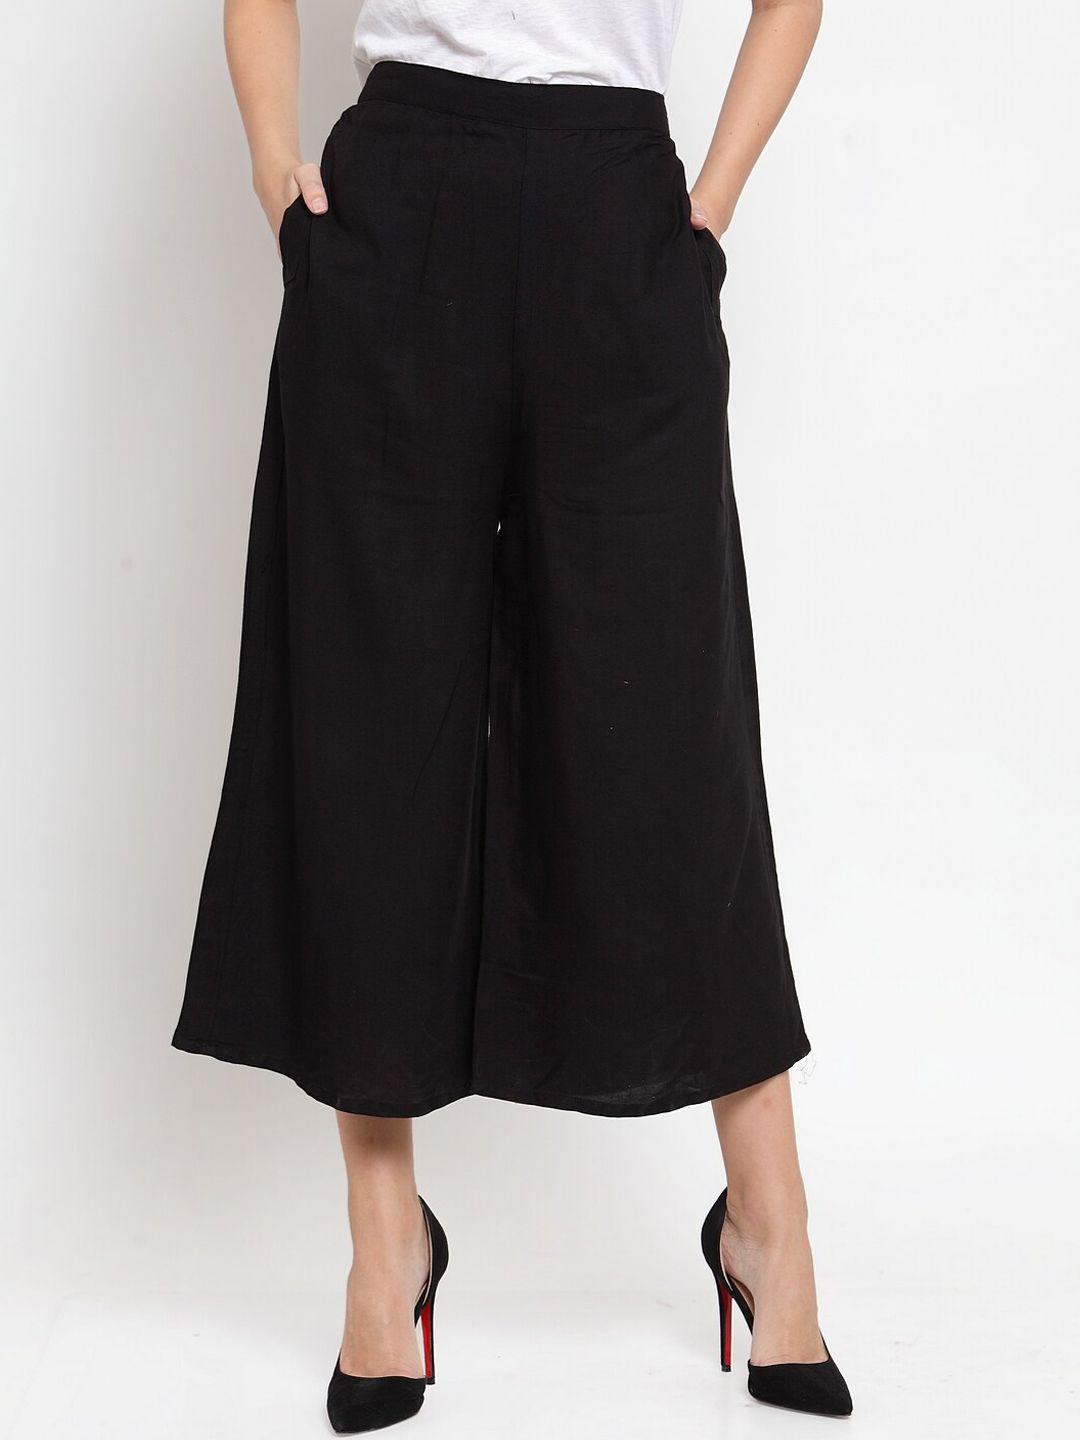 clora creation women black smart culottes trousers